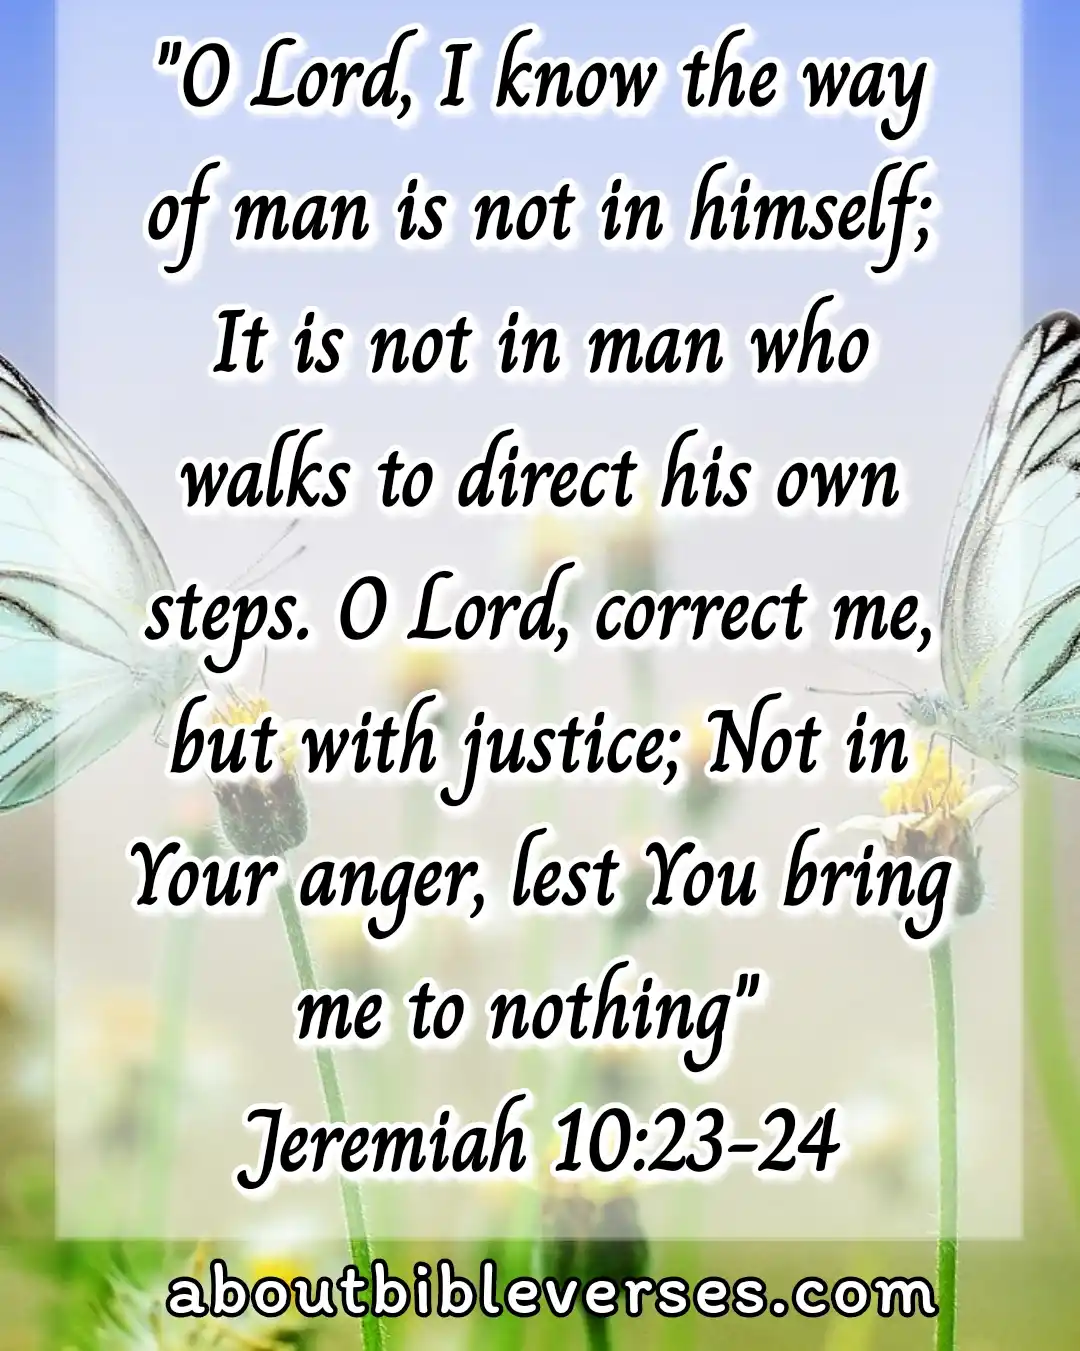 Today Bible verse (Jeremiah 10:23-24)